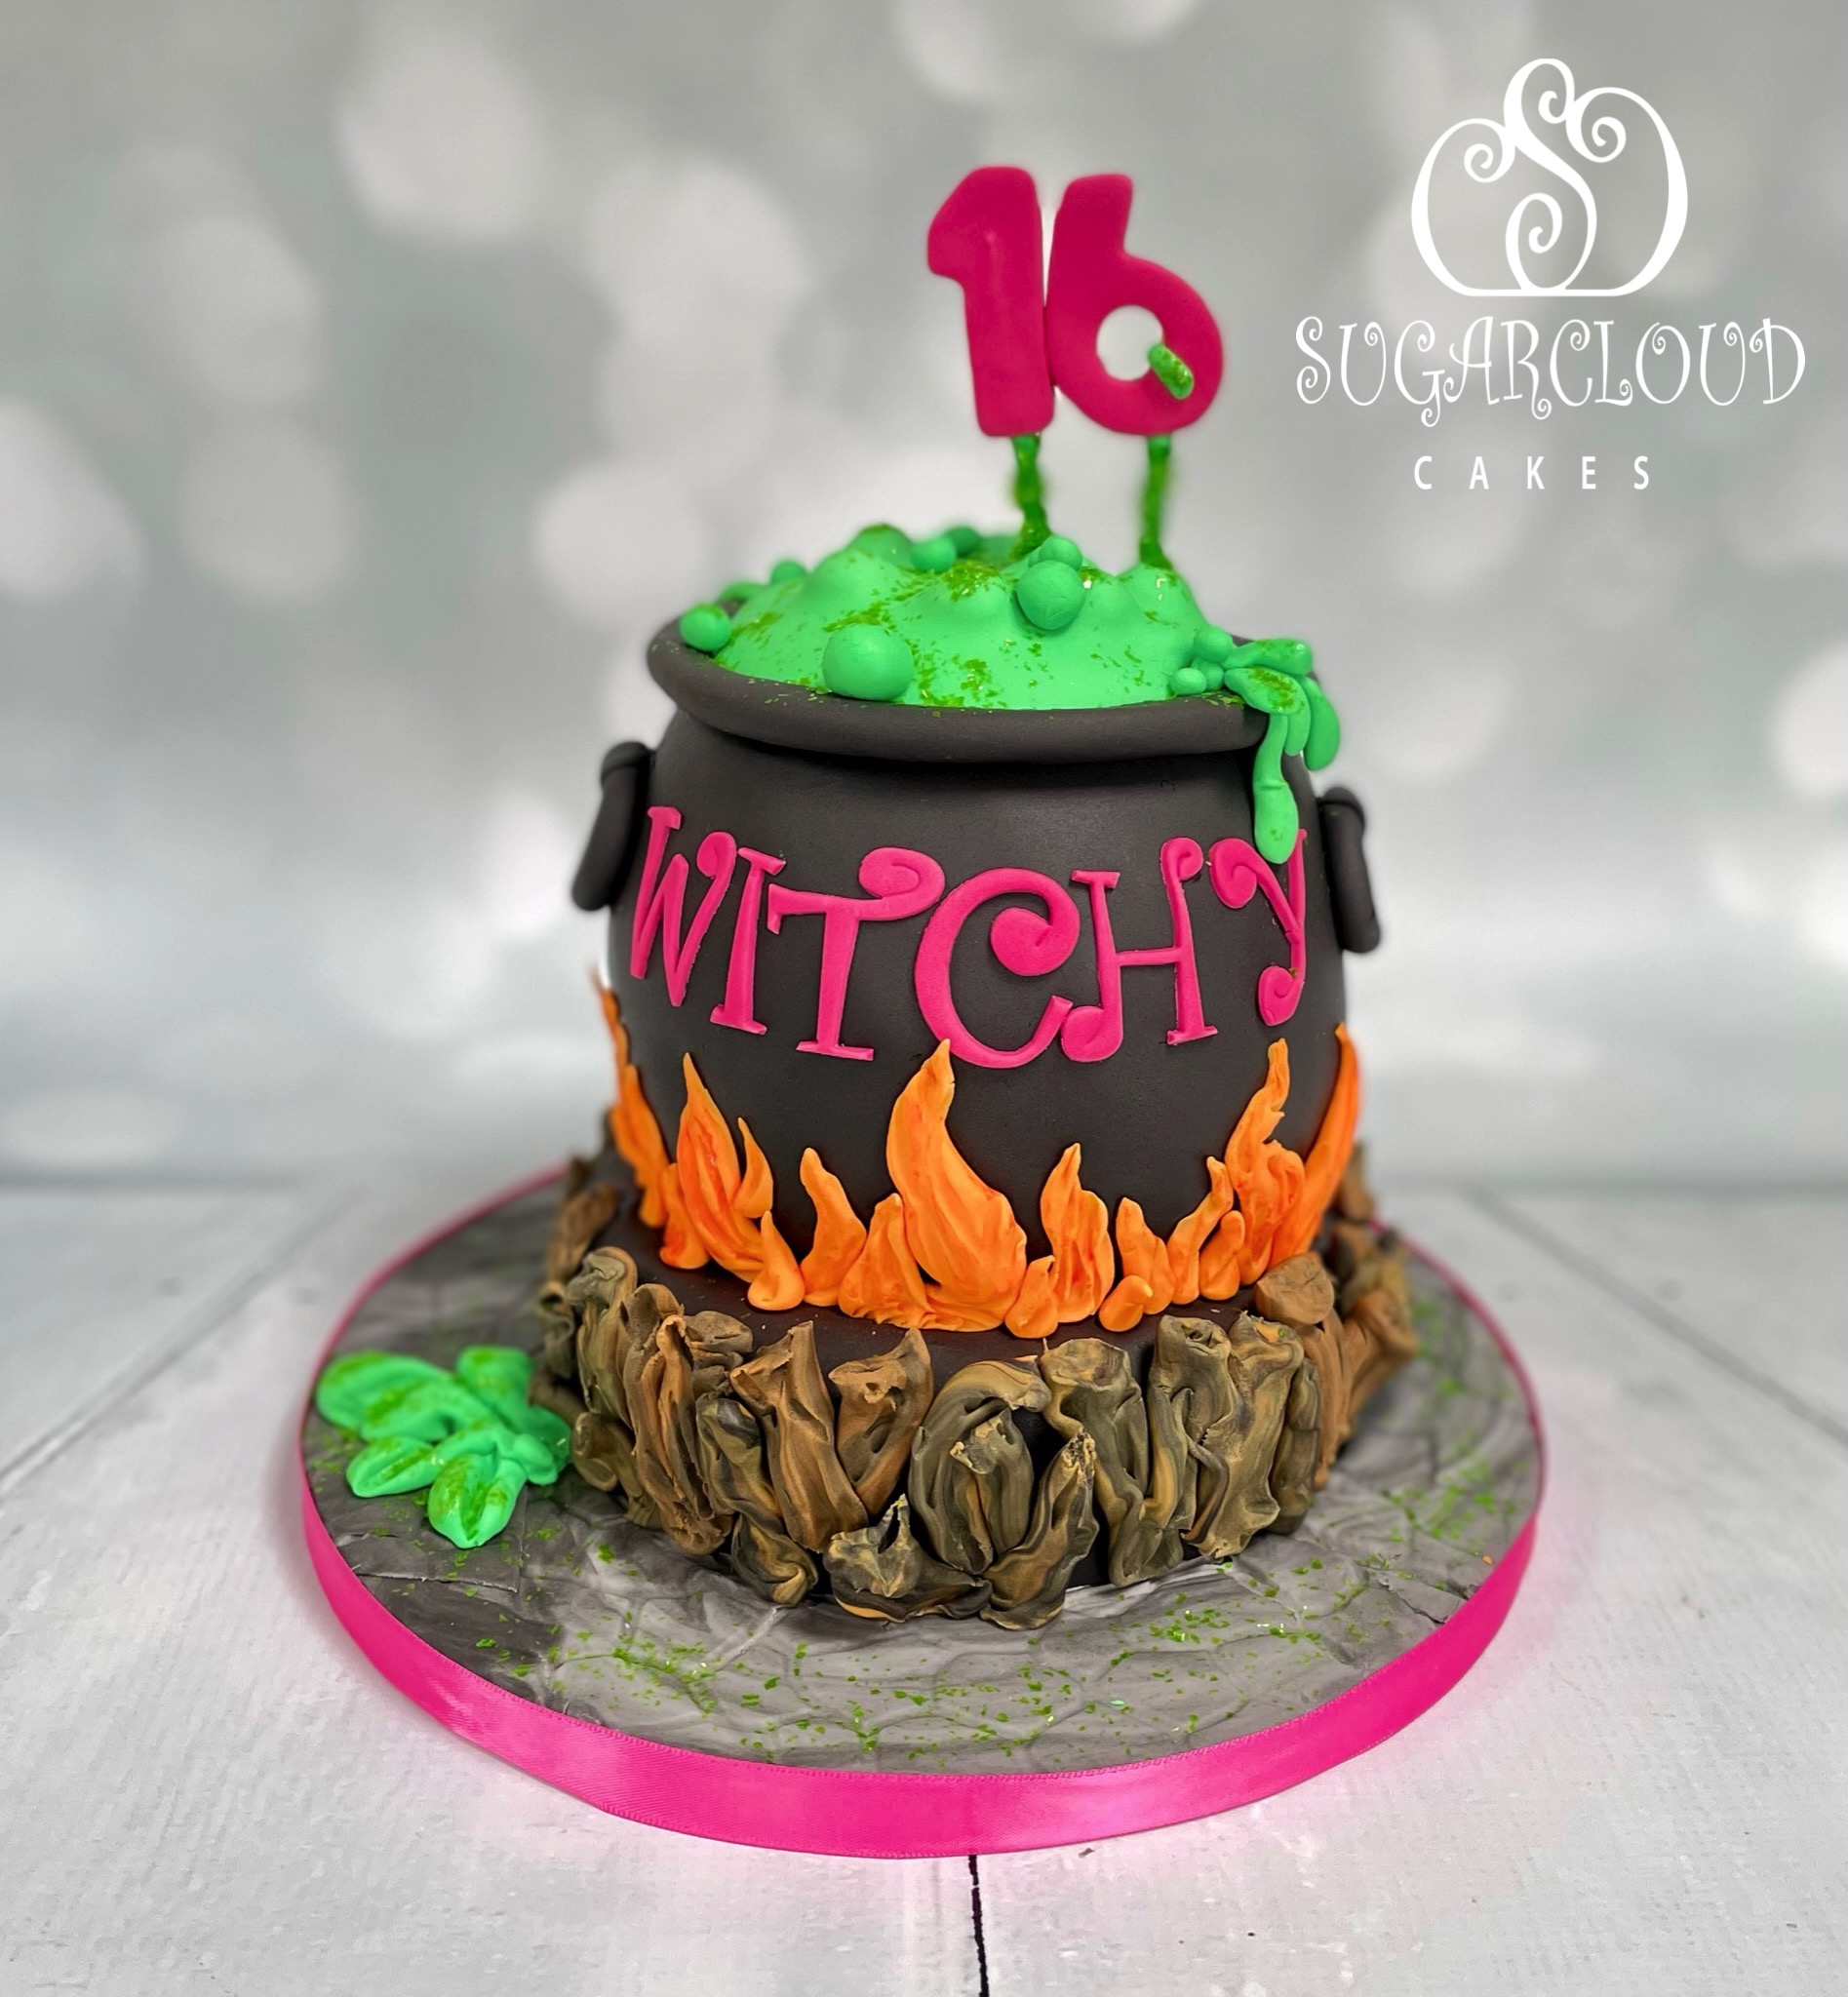 A 16th Birthday Witch Themed Chocolate Sponge Cake, Crewe